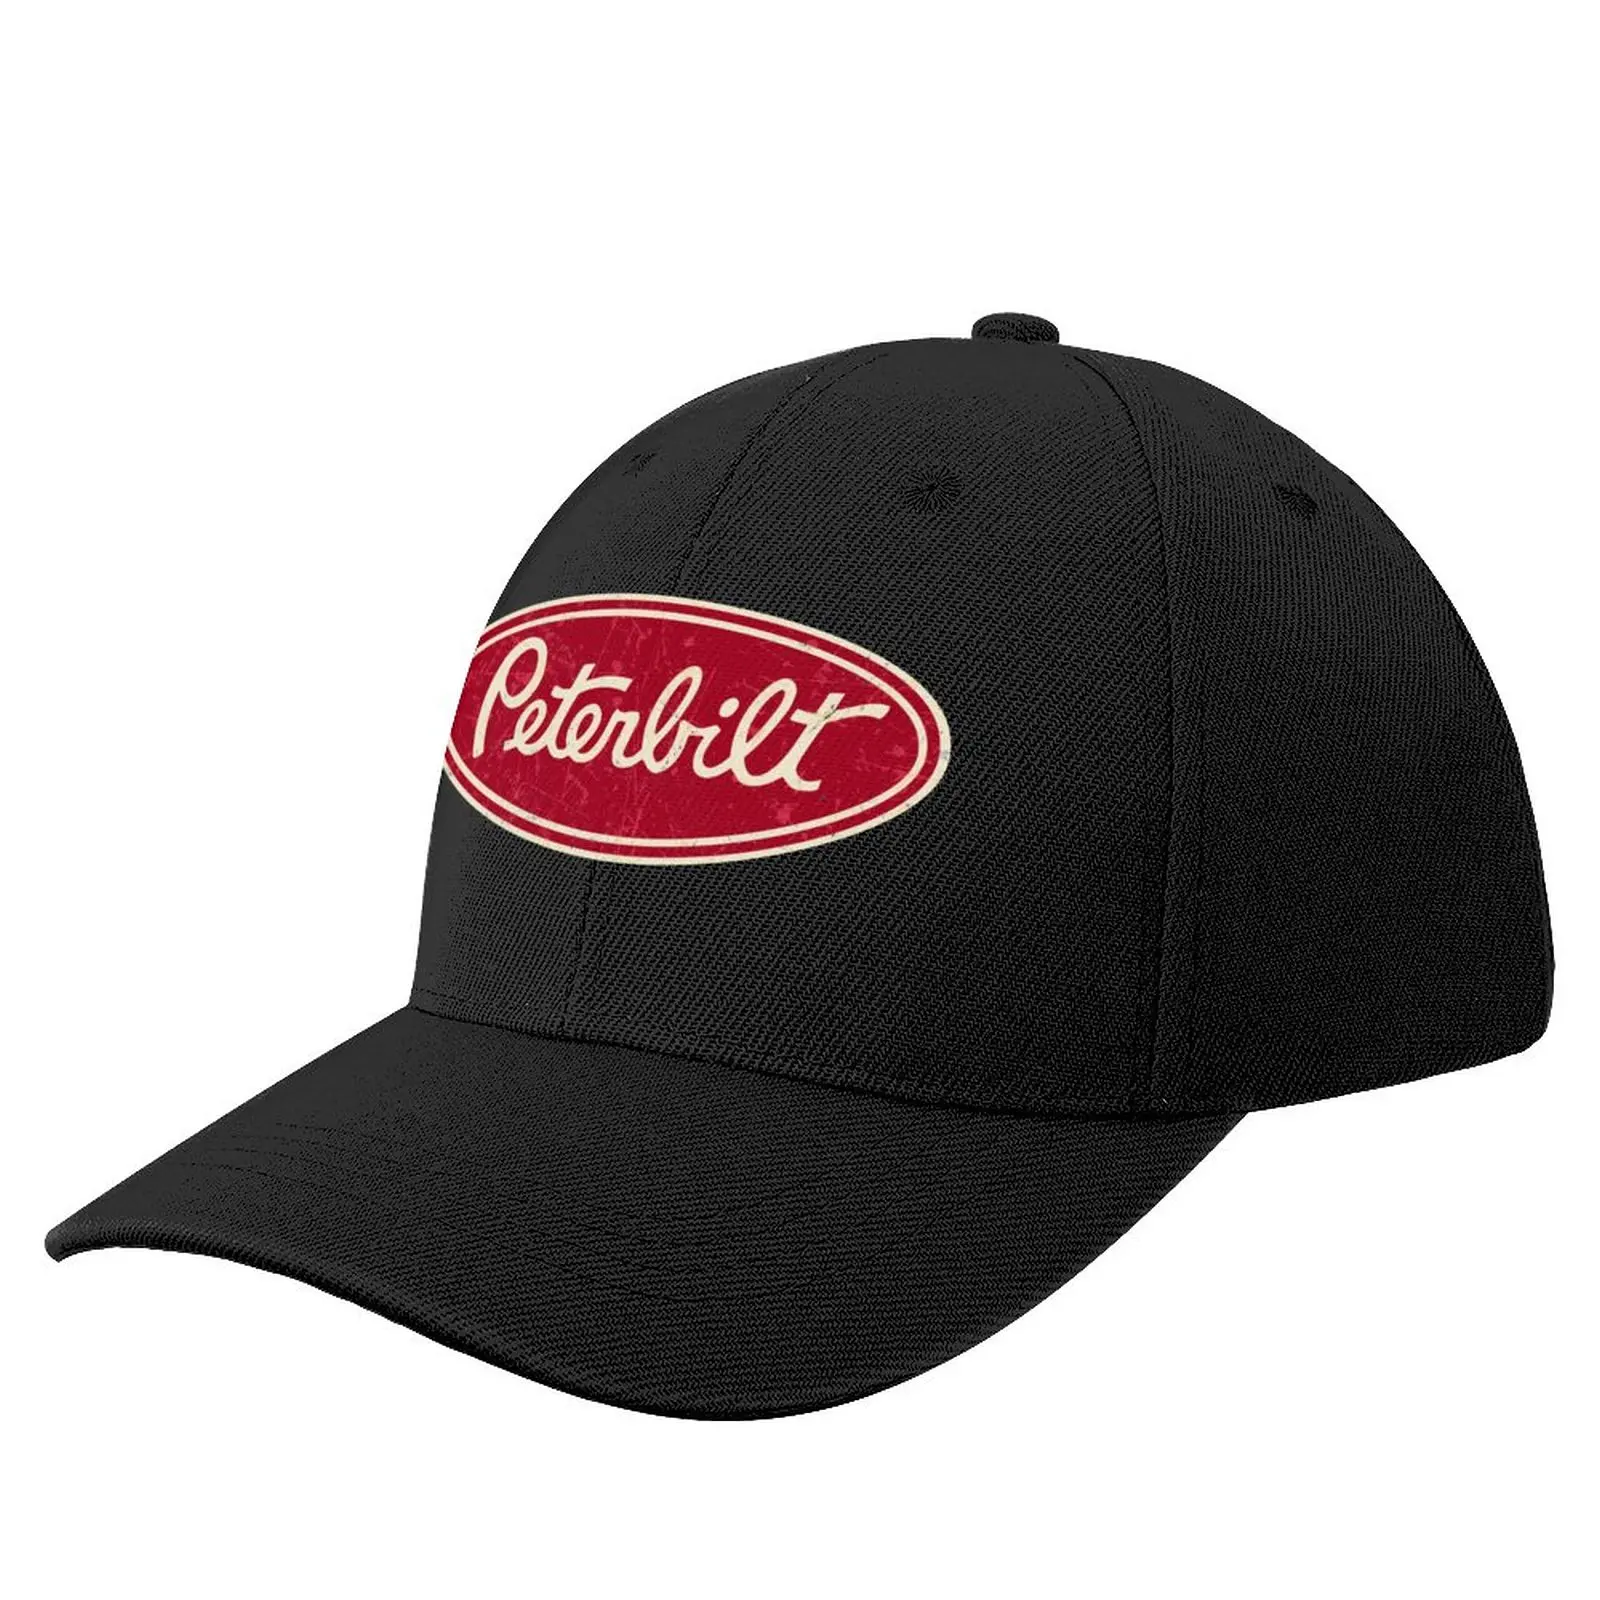 

Peterbilt Truck Racing Vintage Baseball Cap Uv Protection Solar Hat birthday Military Cap Man Men Cap Luxury Brand Women's